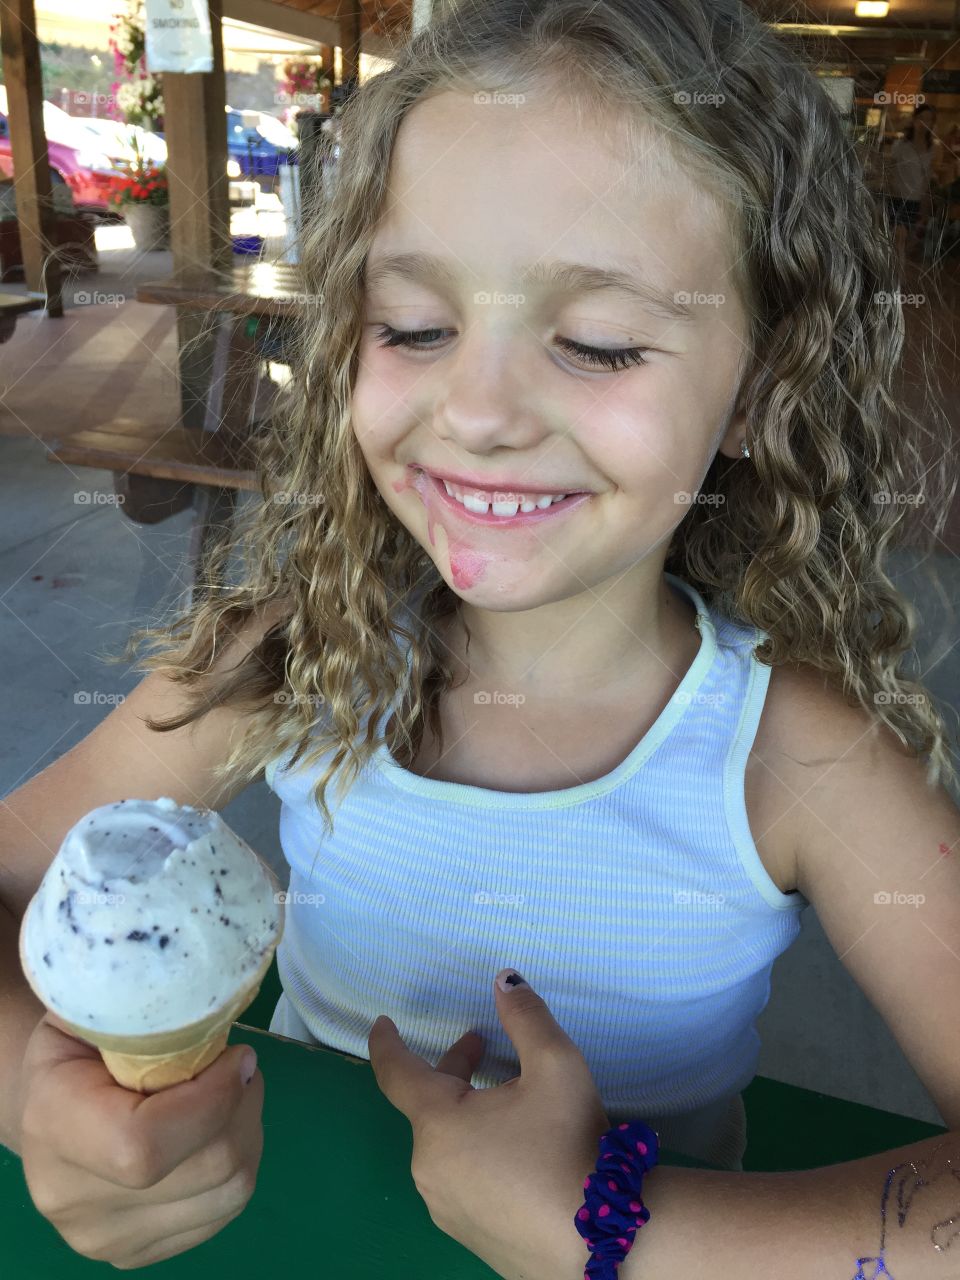 Summer days with ice cream